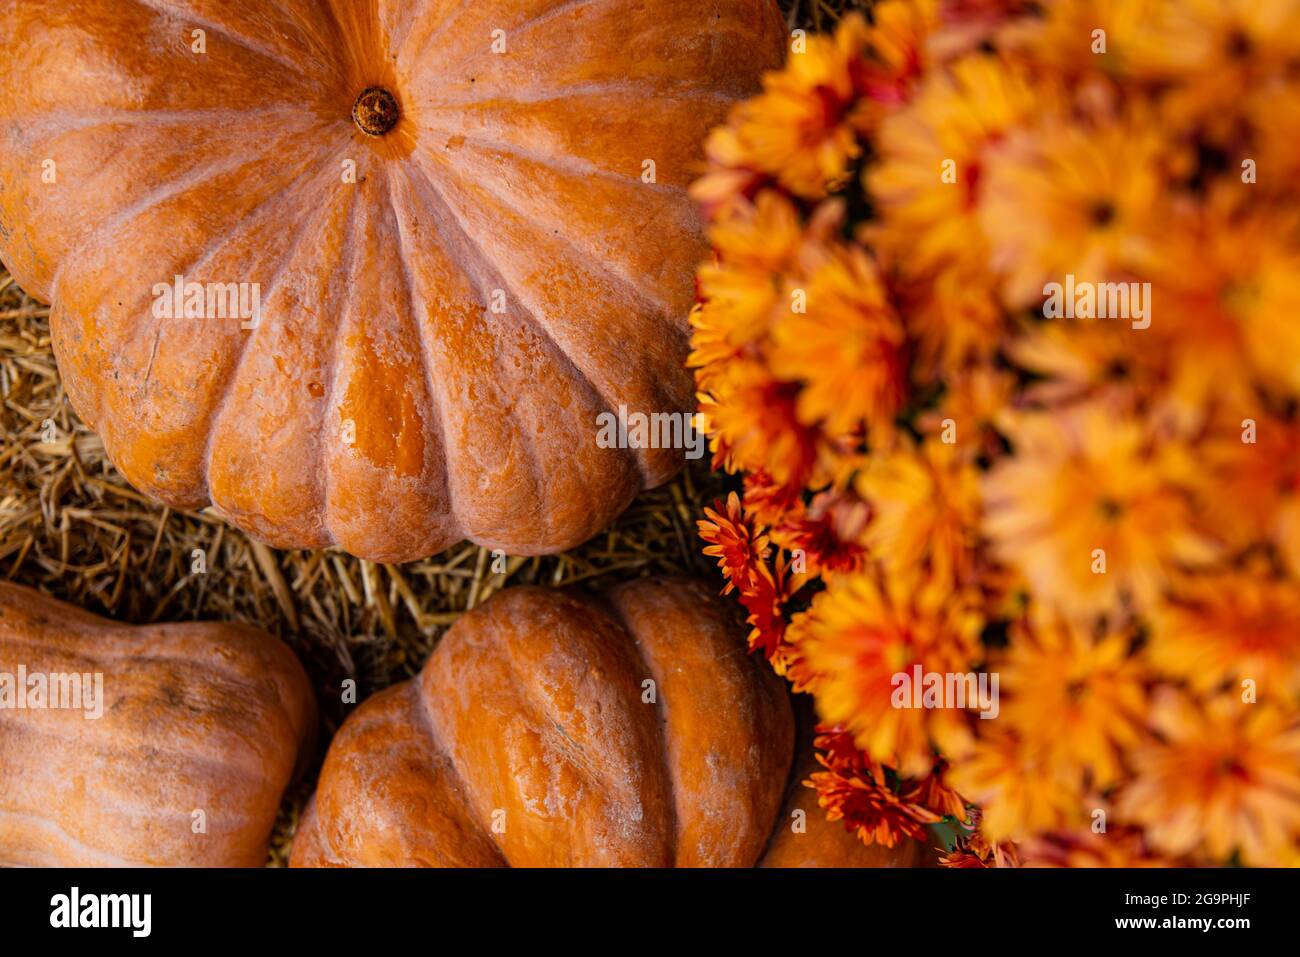 layout autumn flowers pumpkins on straw harvest holiday halloween. Stock Photo